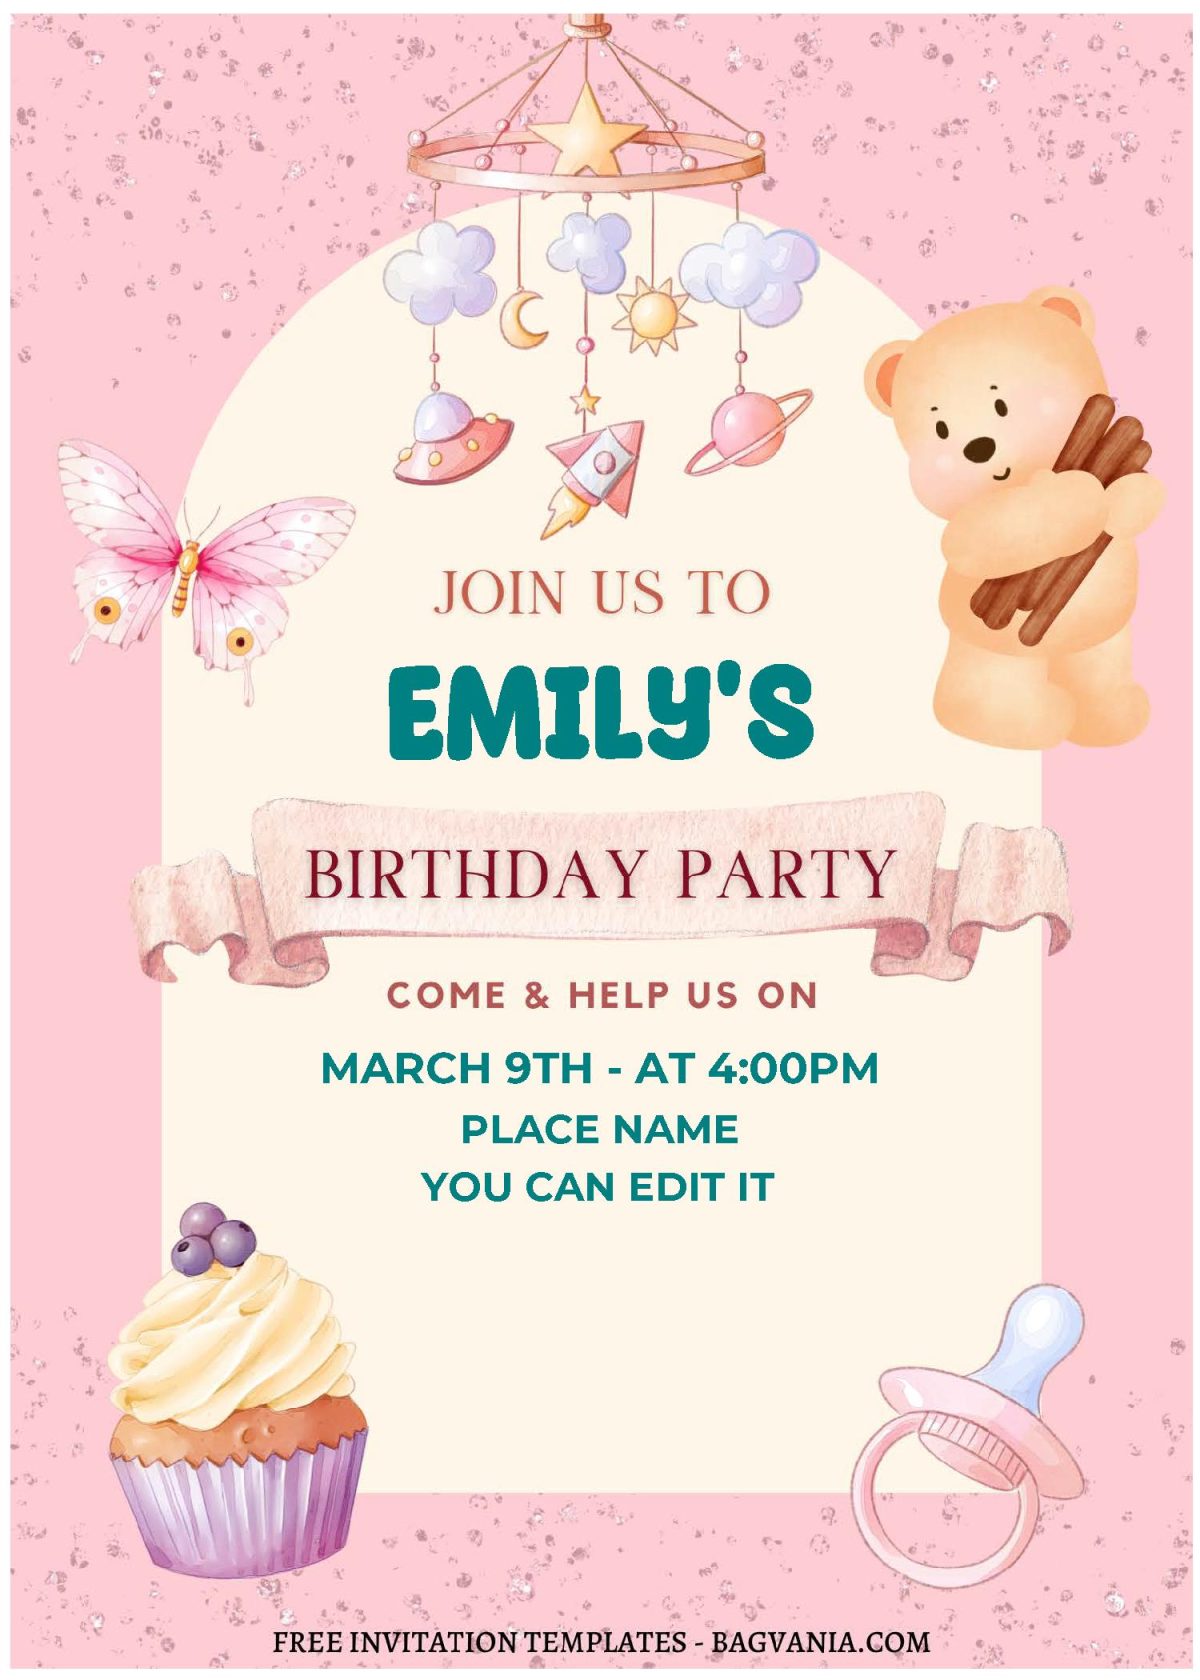 (Free Editable PDF) Whimsy Teddy Bear Birthday Invitation Templates E